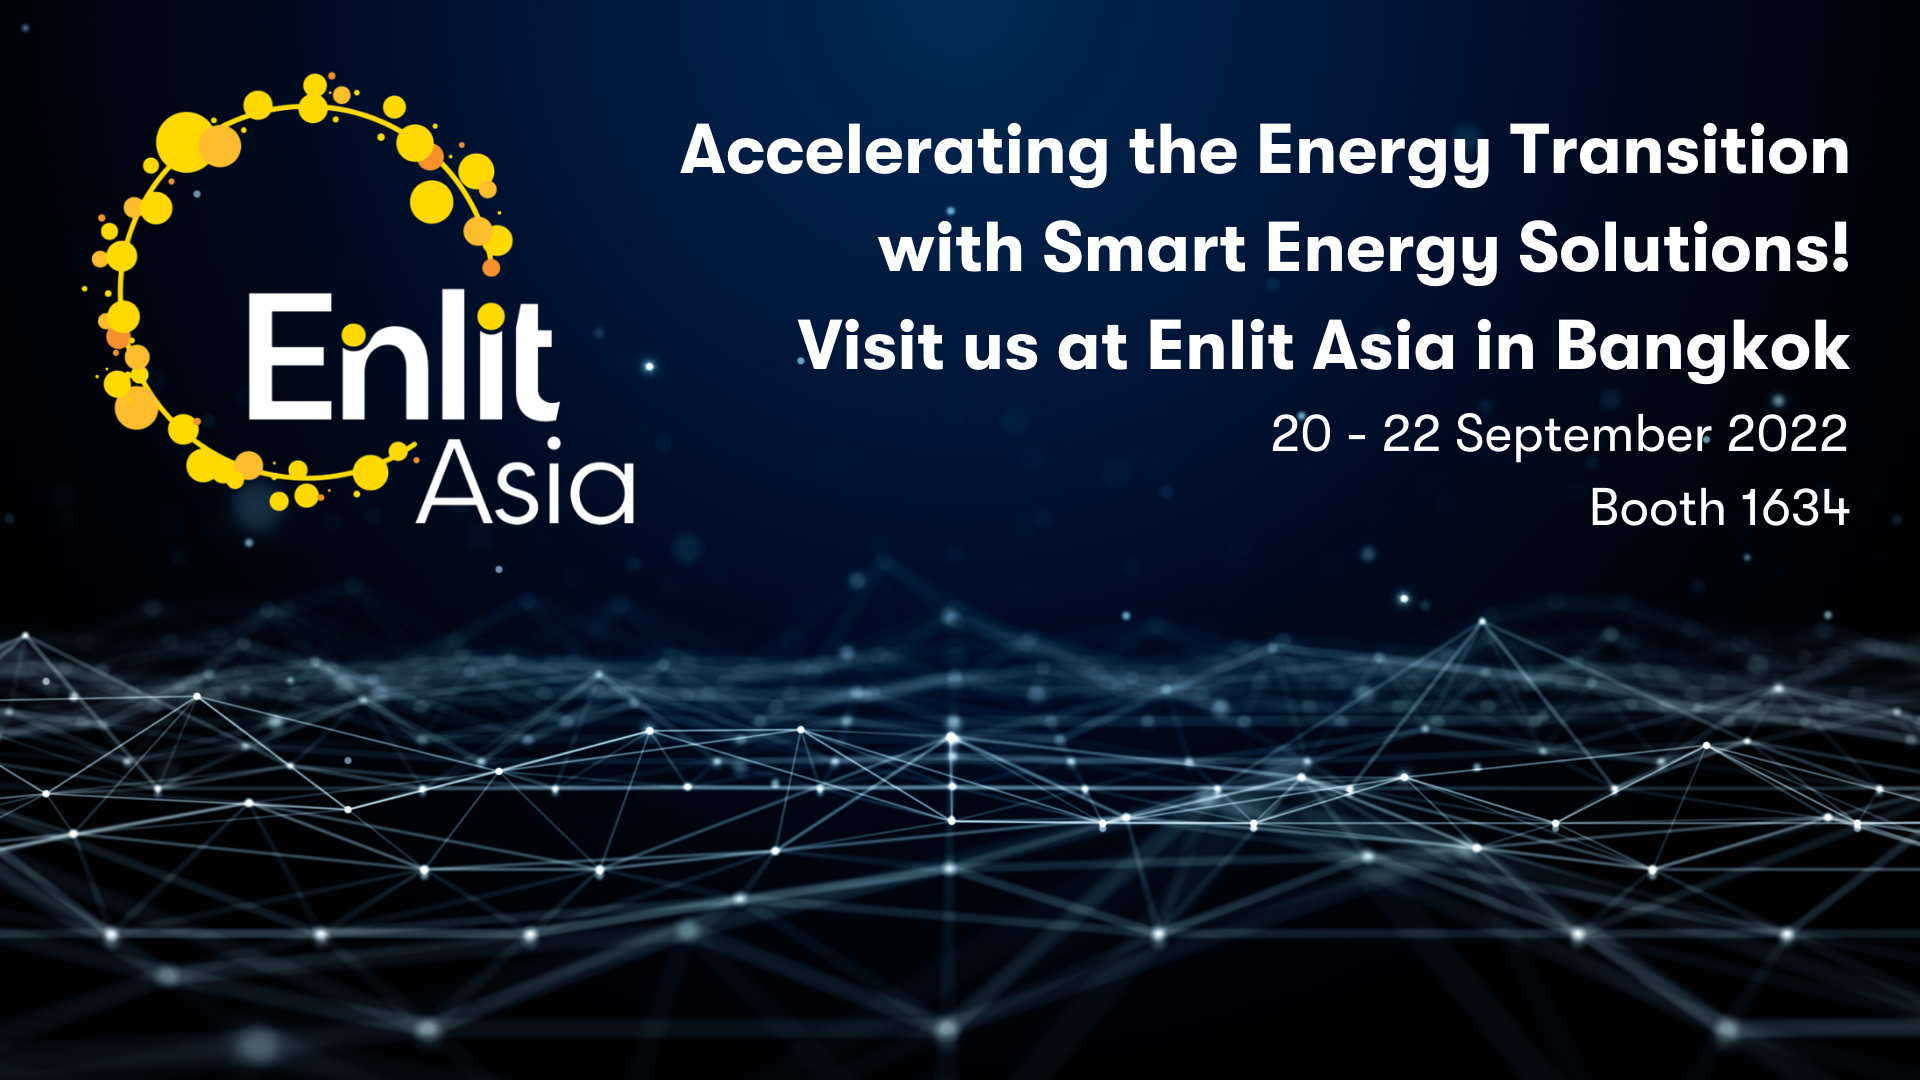 uploads/pics/https://www.ebsilon.com/uploads/pics/Accelerating_the_Energy_Transition_with_Smart_Digital_Solutions_Visit_us_at_Enlit_Asia_in_Bangkok__1__12.png